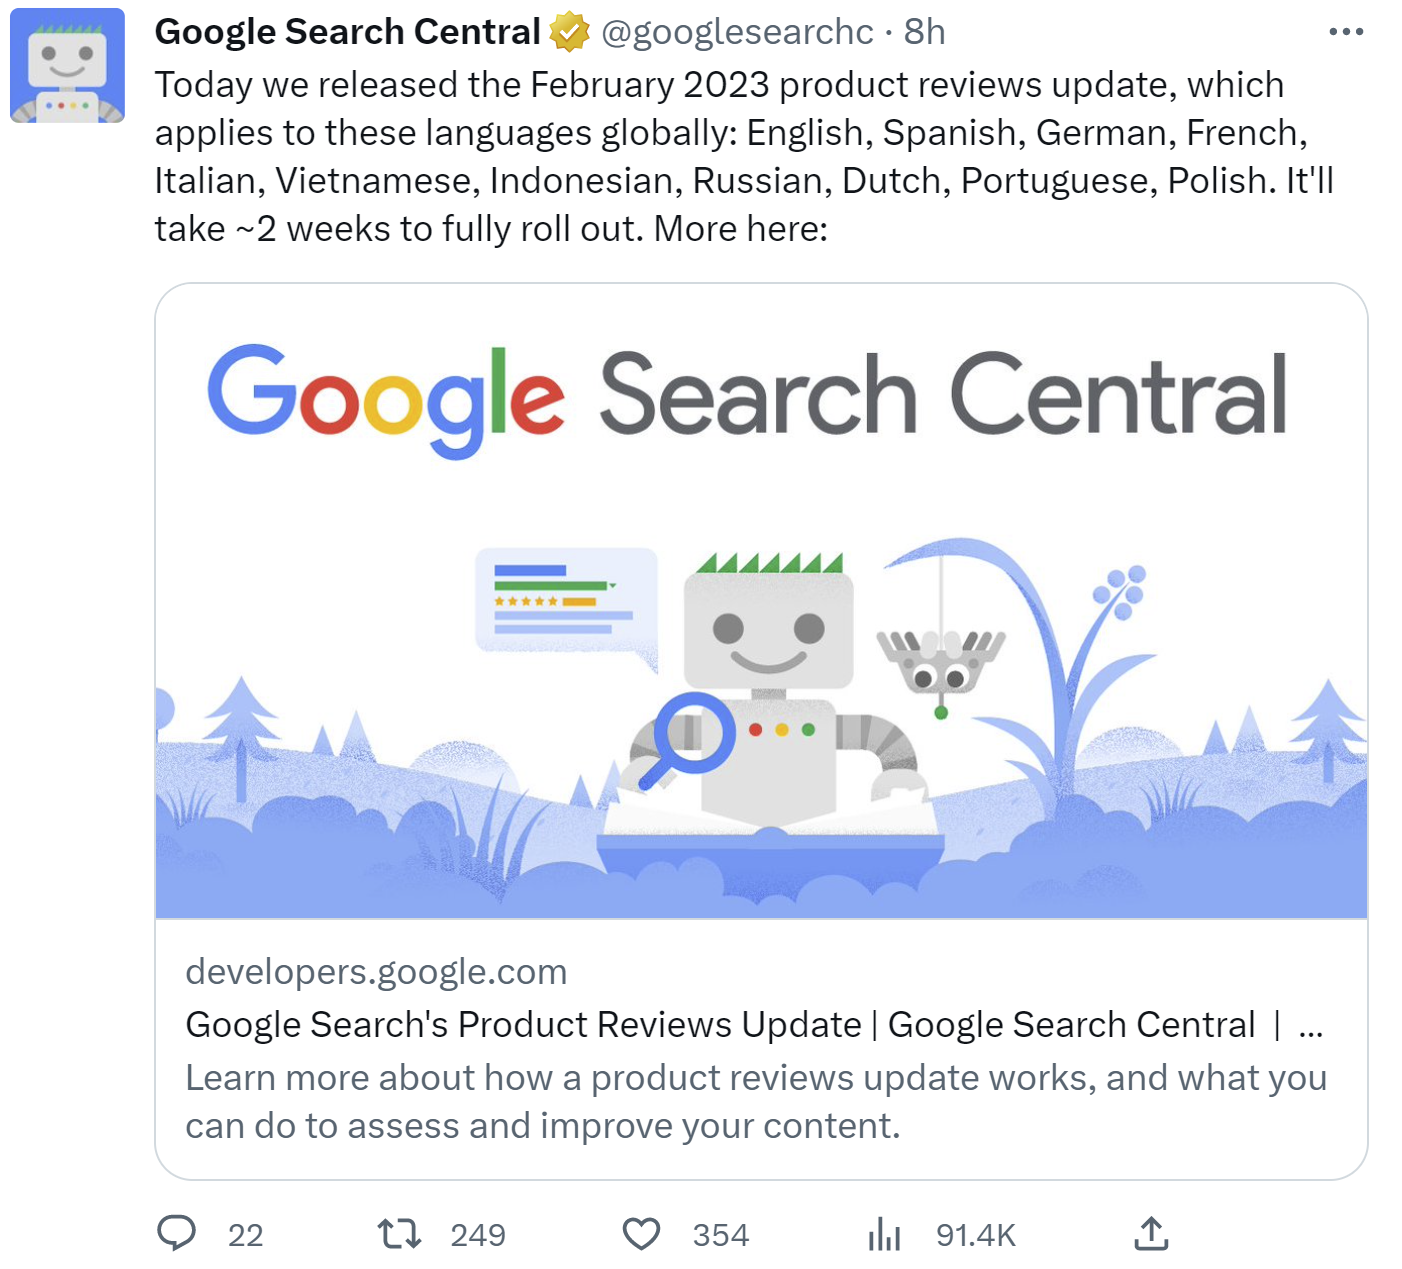 Google rollt 'February 2023 Product Reviews Update' aus